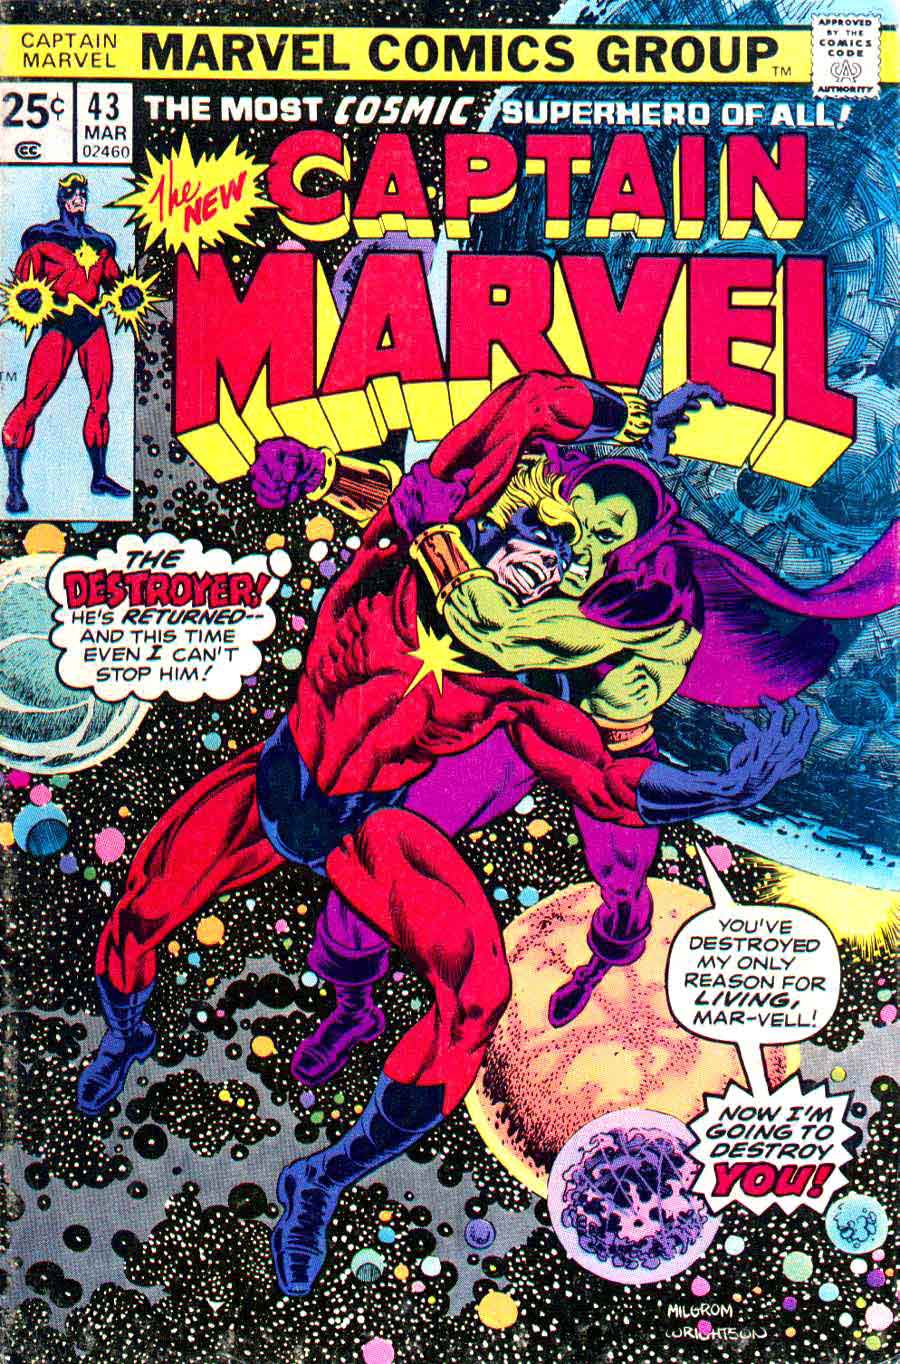 Captain Marvel v2 #43 marvel 1970s bronze age comic book cover art by Bernie Wrightson